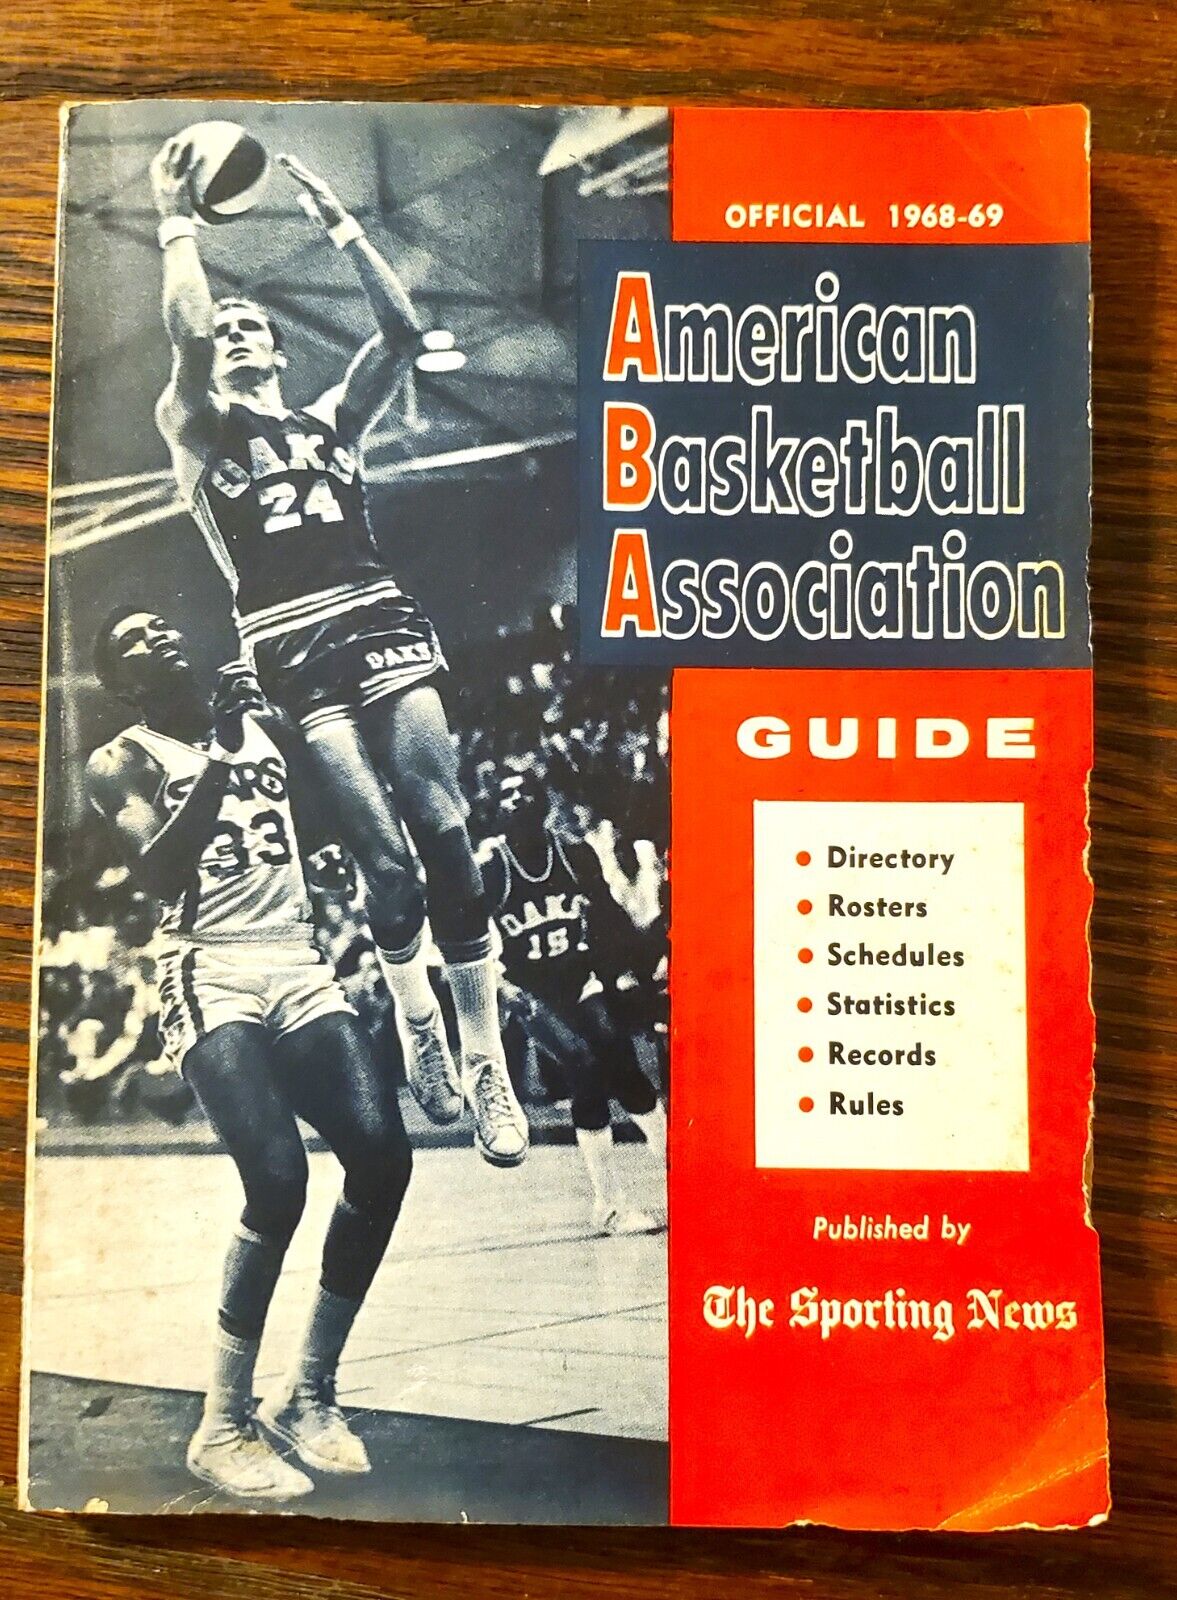 Official 1968-69 American Basketball Association Guide